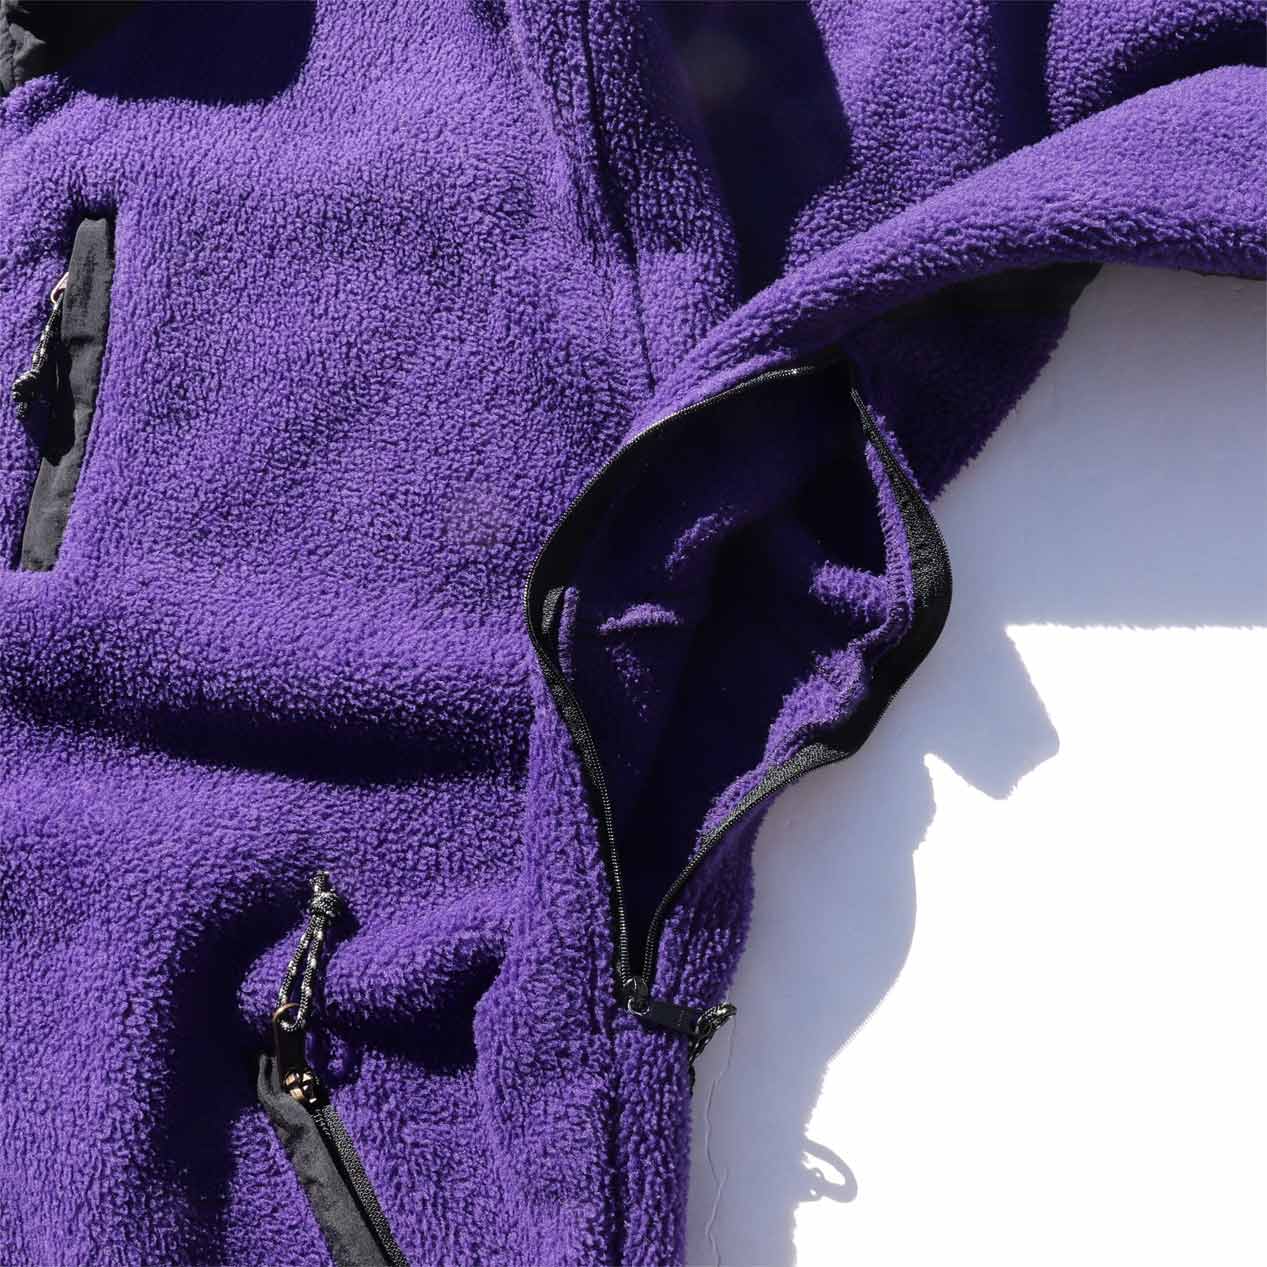 POST JUNK / 90's～ JAGGED EDGE MOUNTAIN GEAR Fleece Jacket Made In 